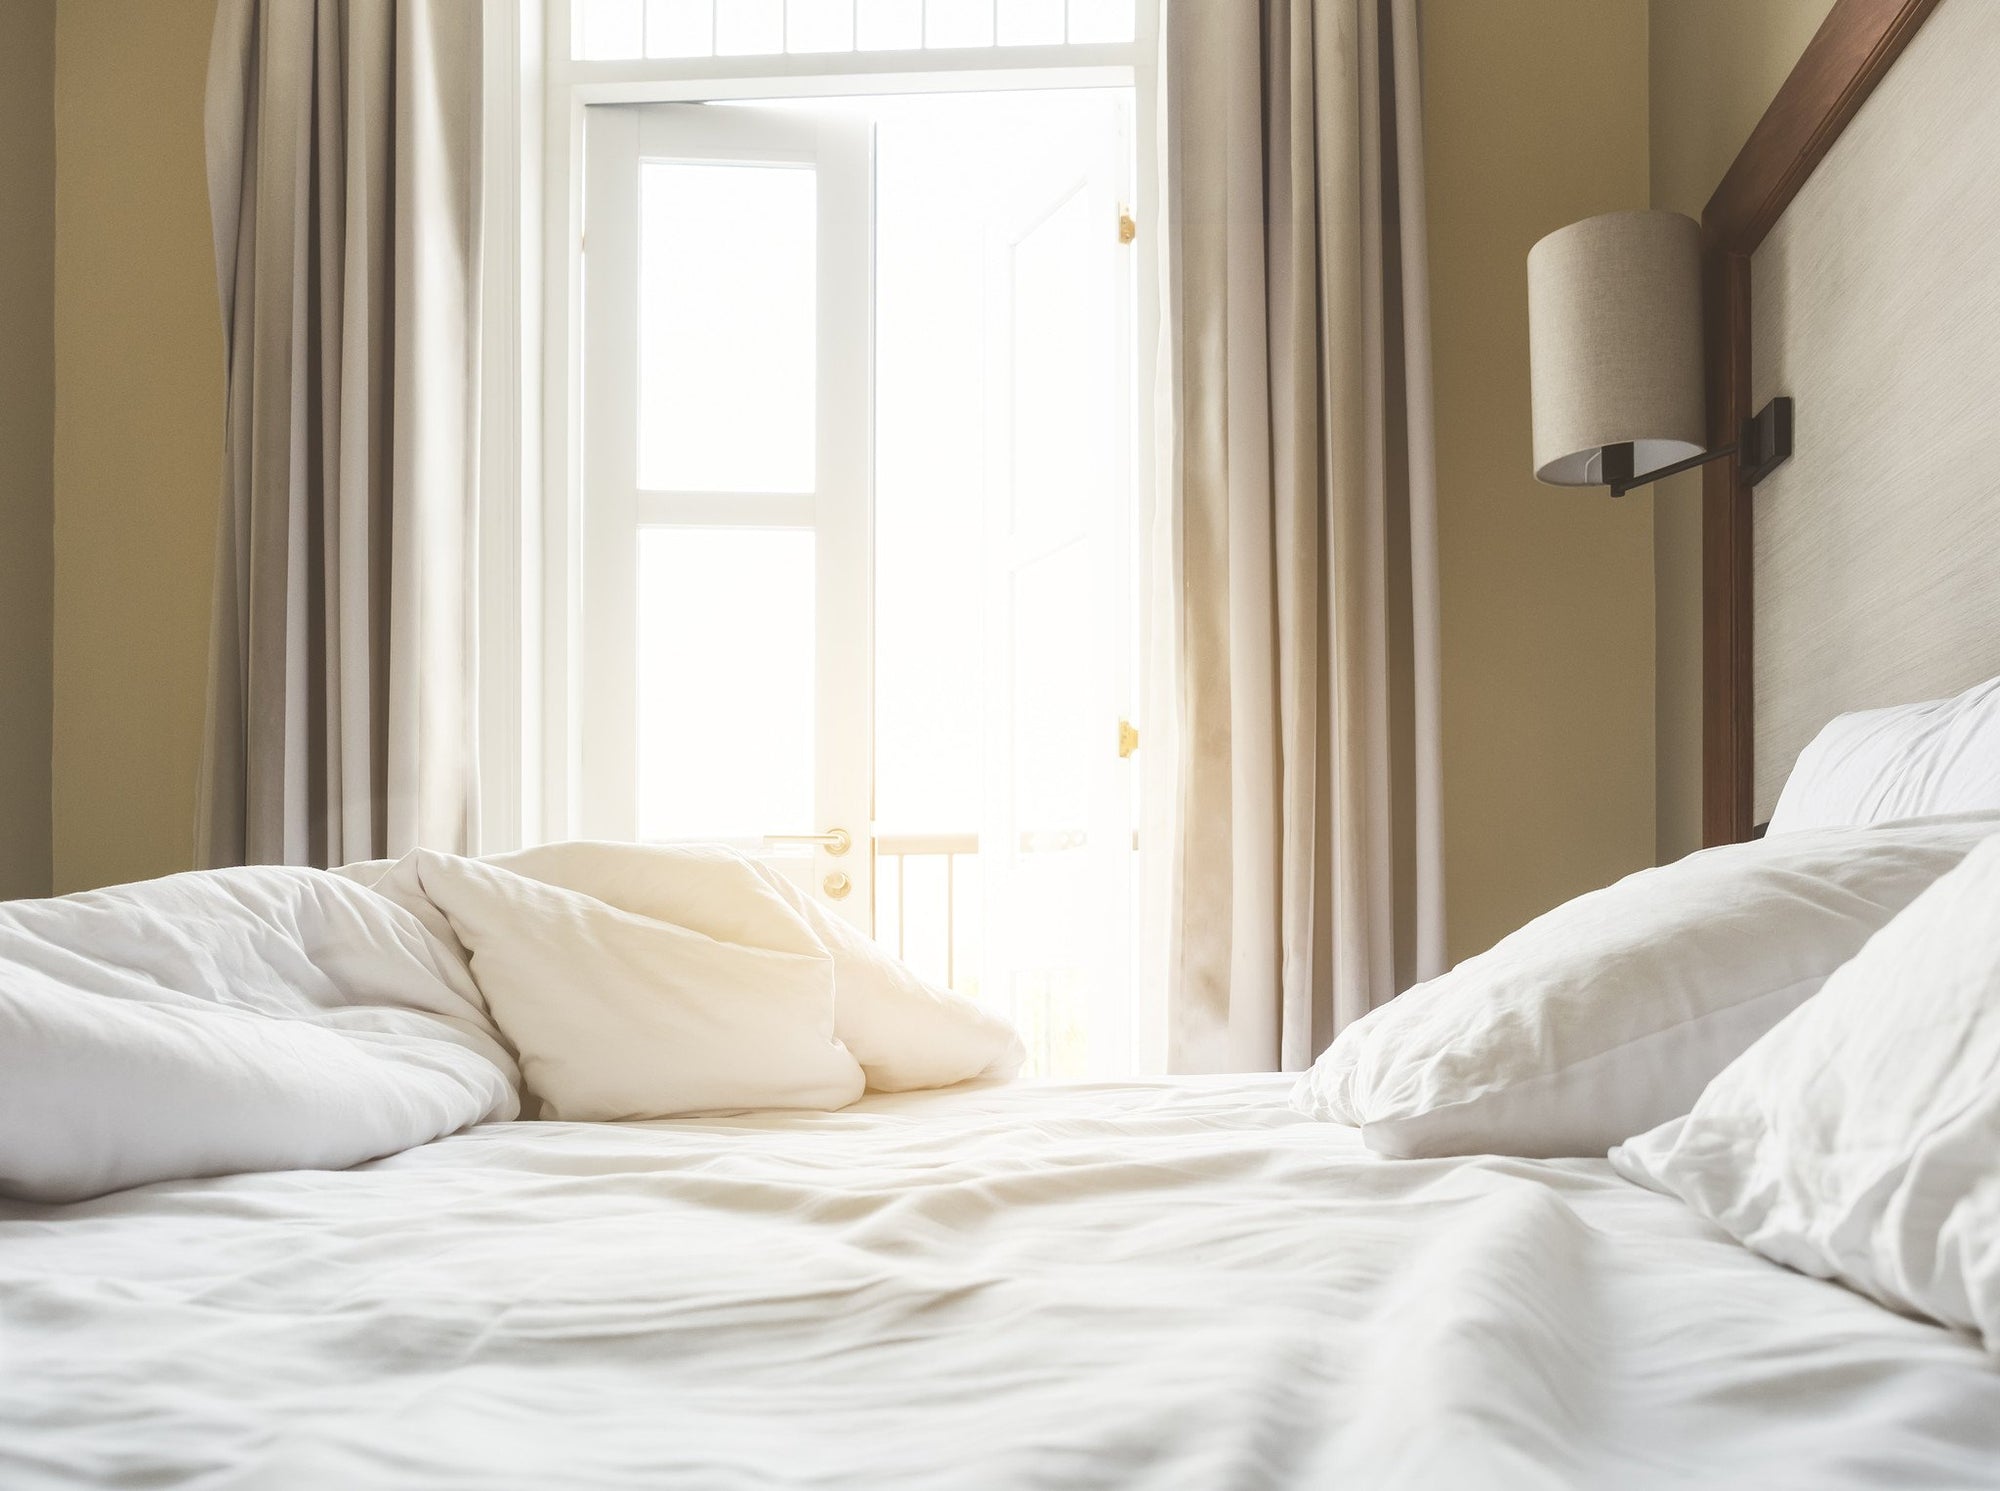 Sleepless No More — Snoring Solution Study Reveals Good News